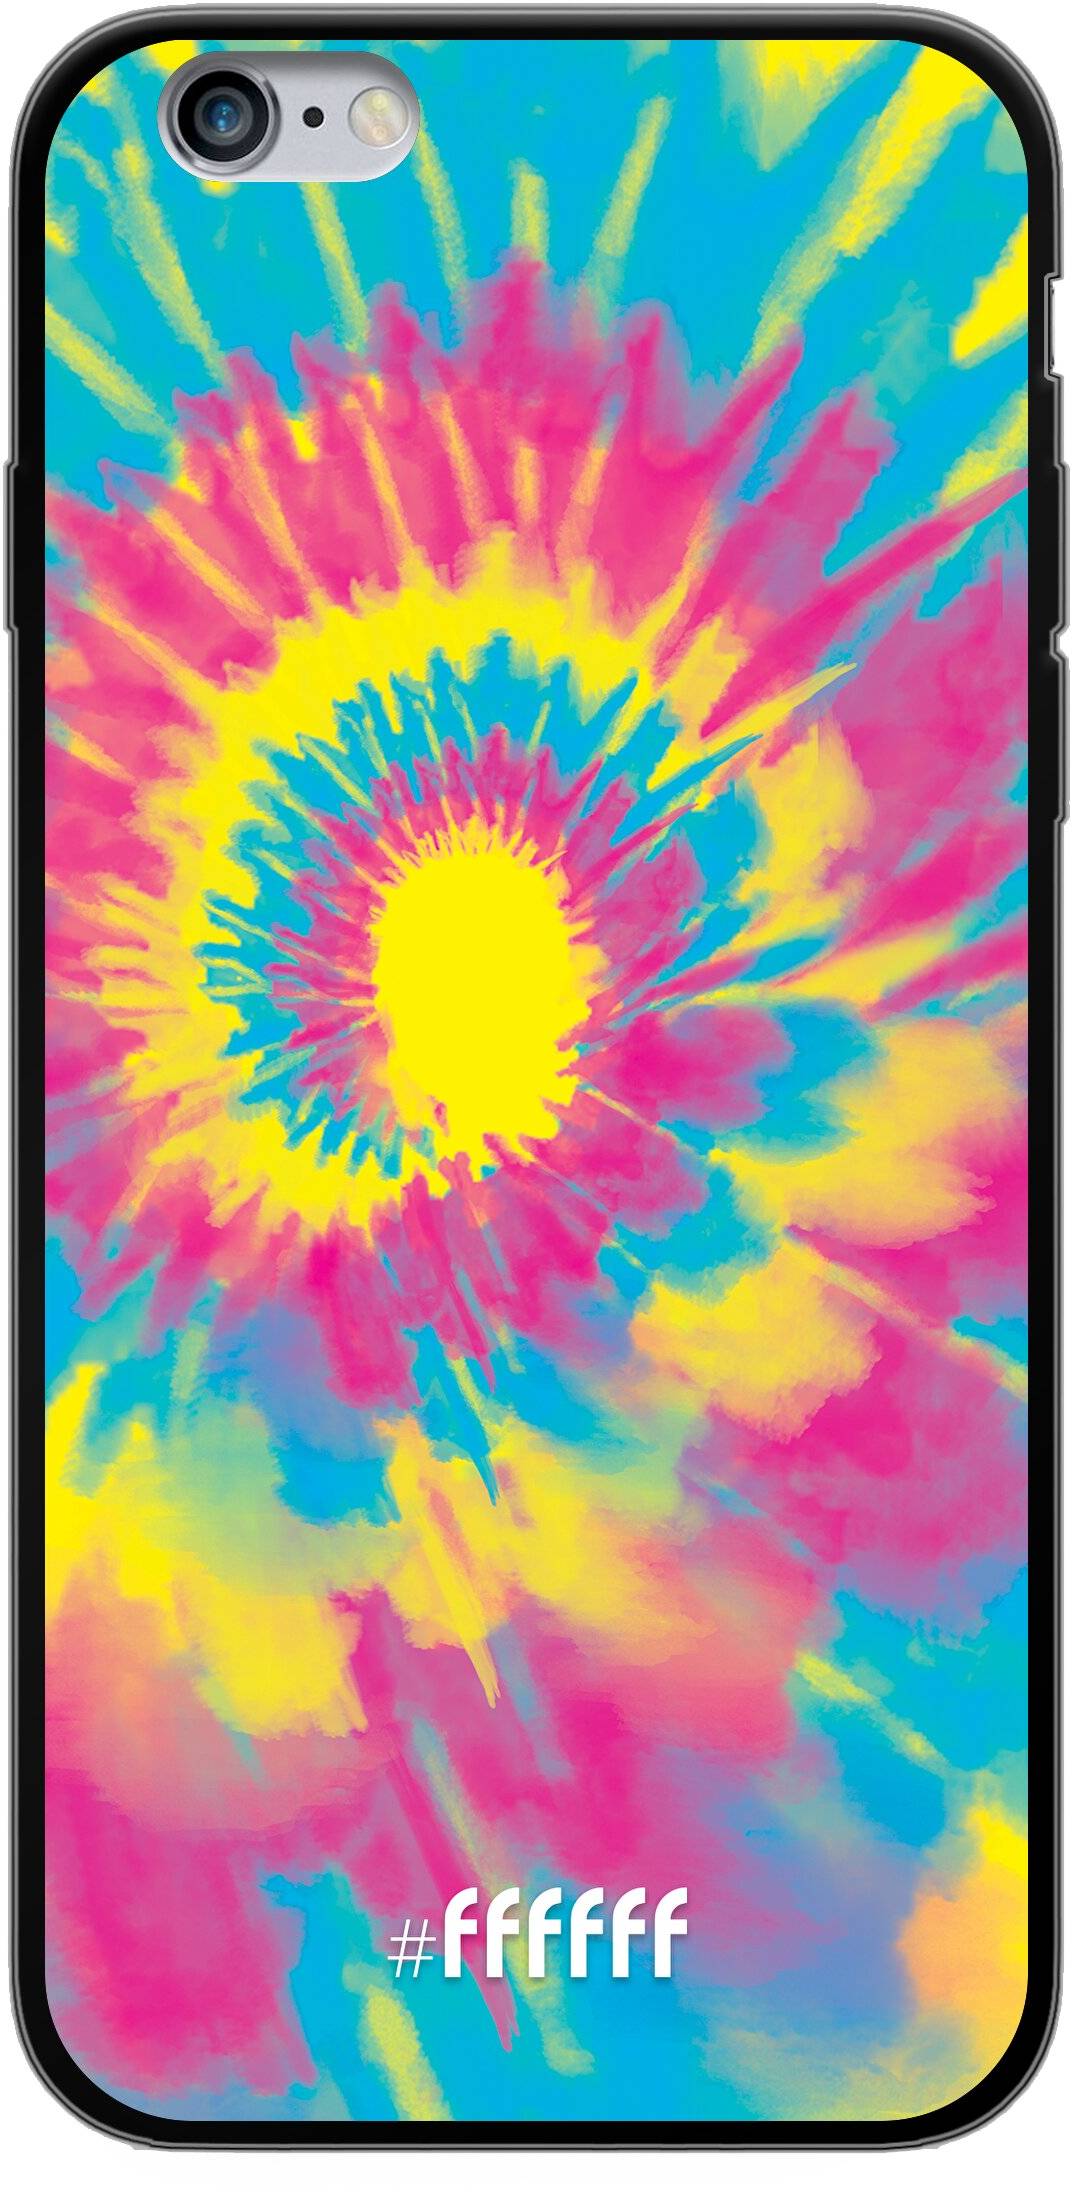 Psychedelic Tie Dye iPhone 6